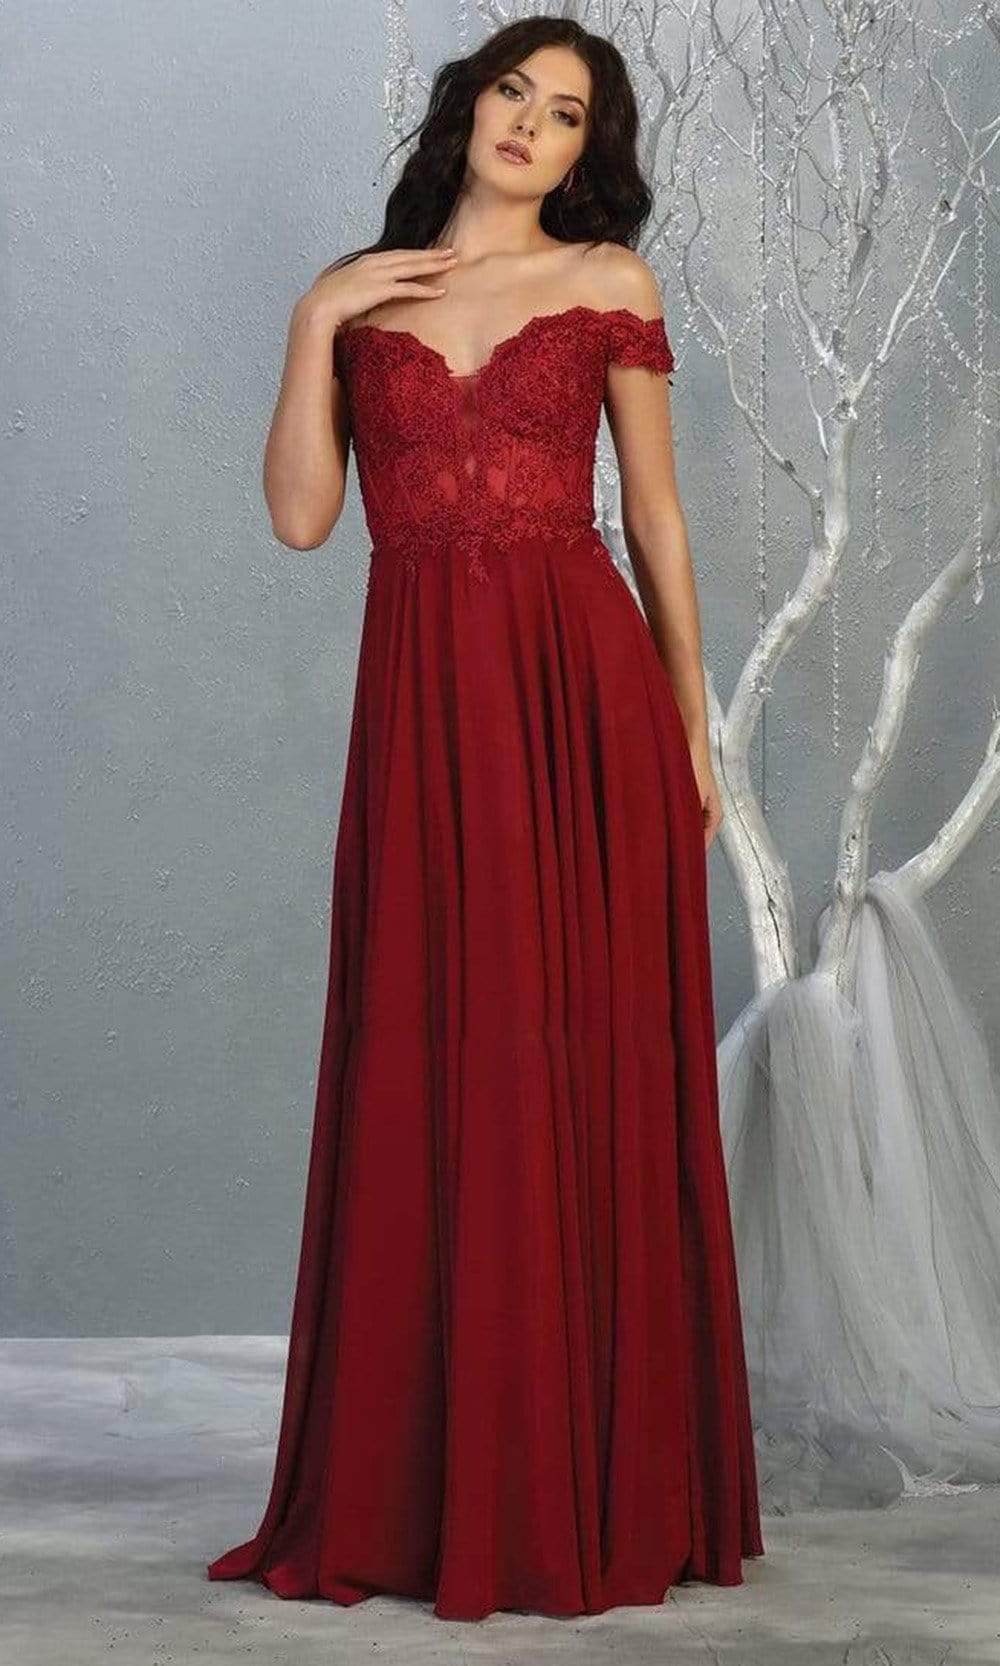 May Queen - MQ1714 Appliqued Sheer Corset Chiffon Dress Prom Dresses 4 / Burgundy